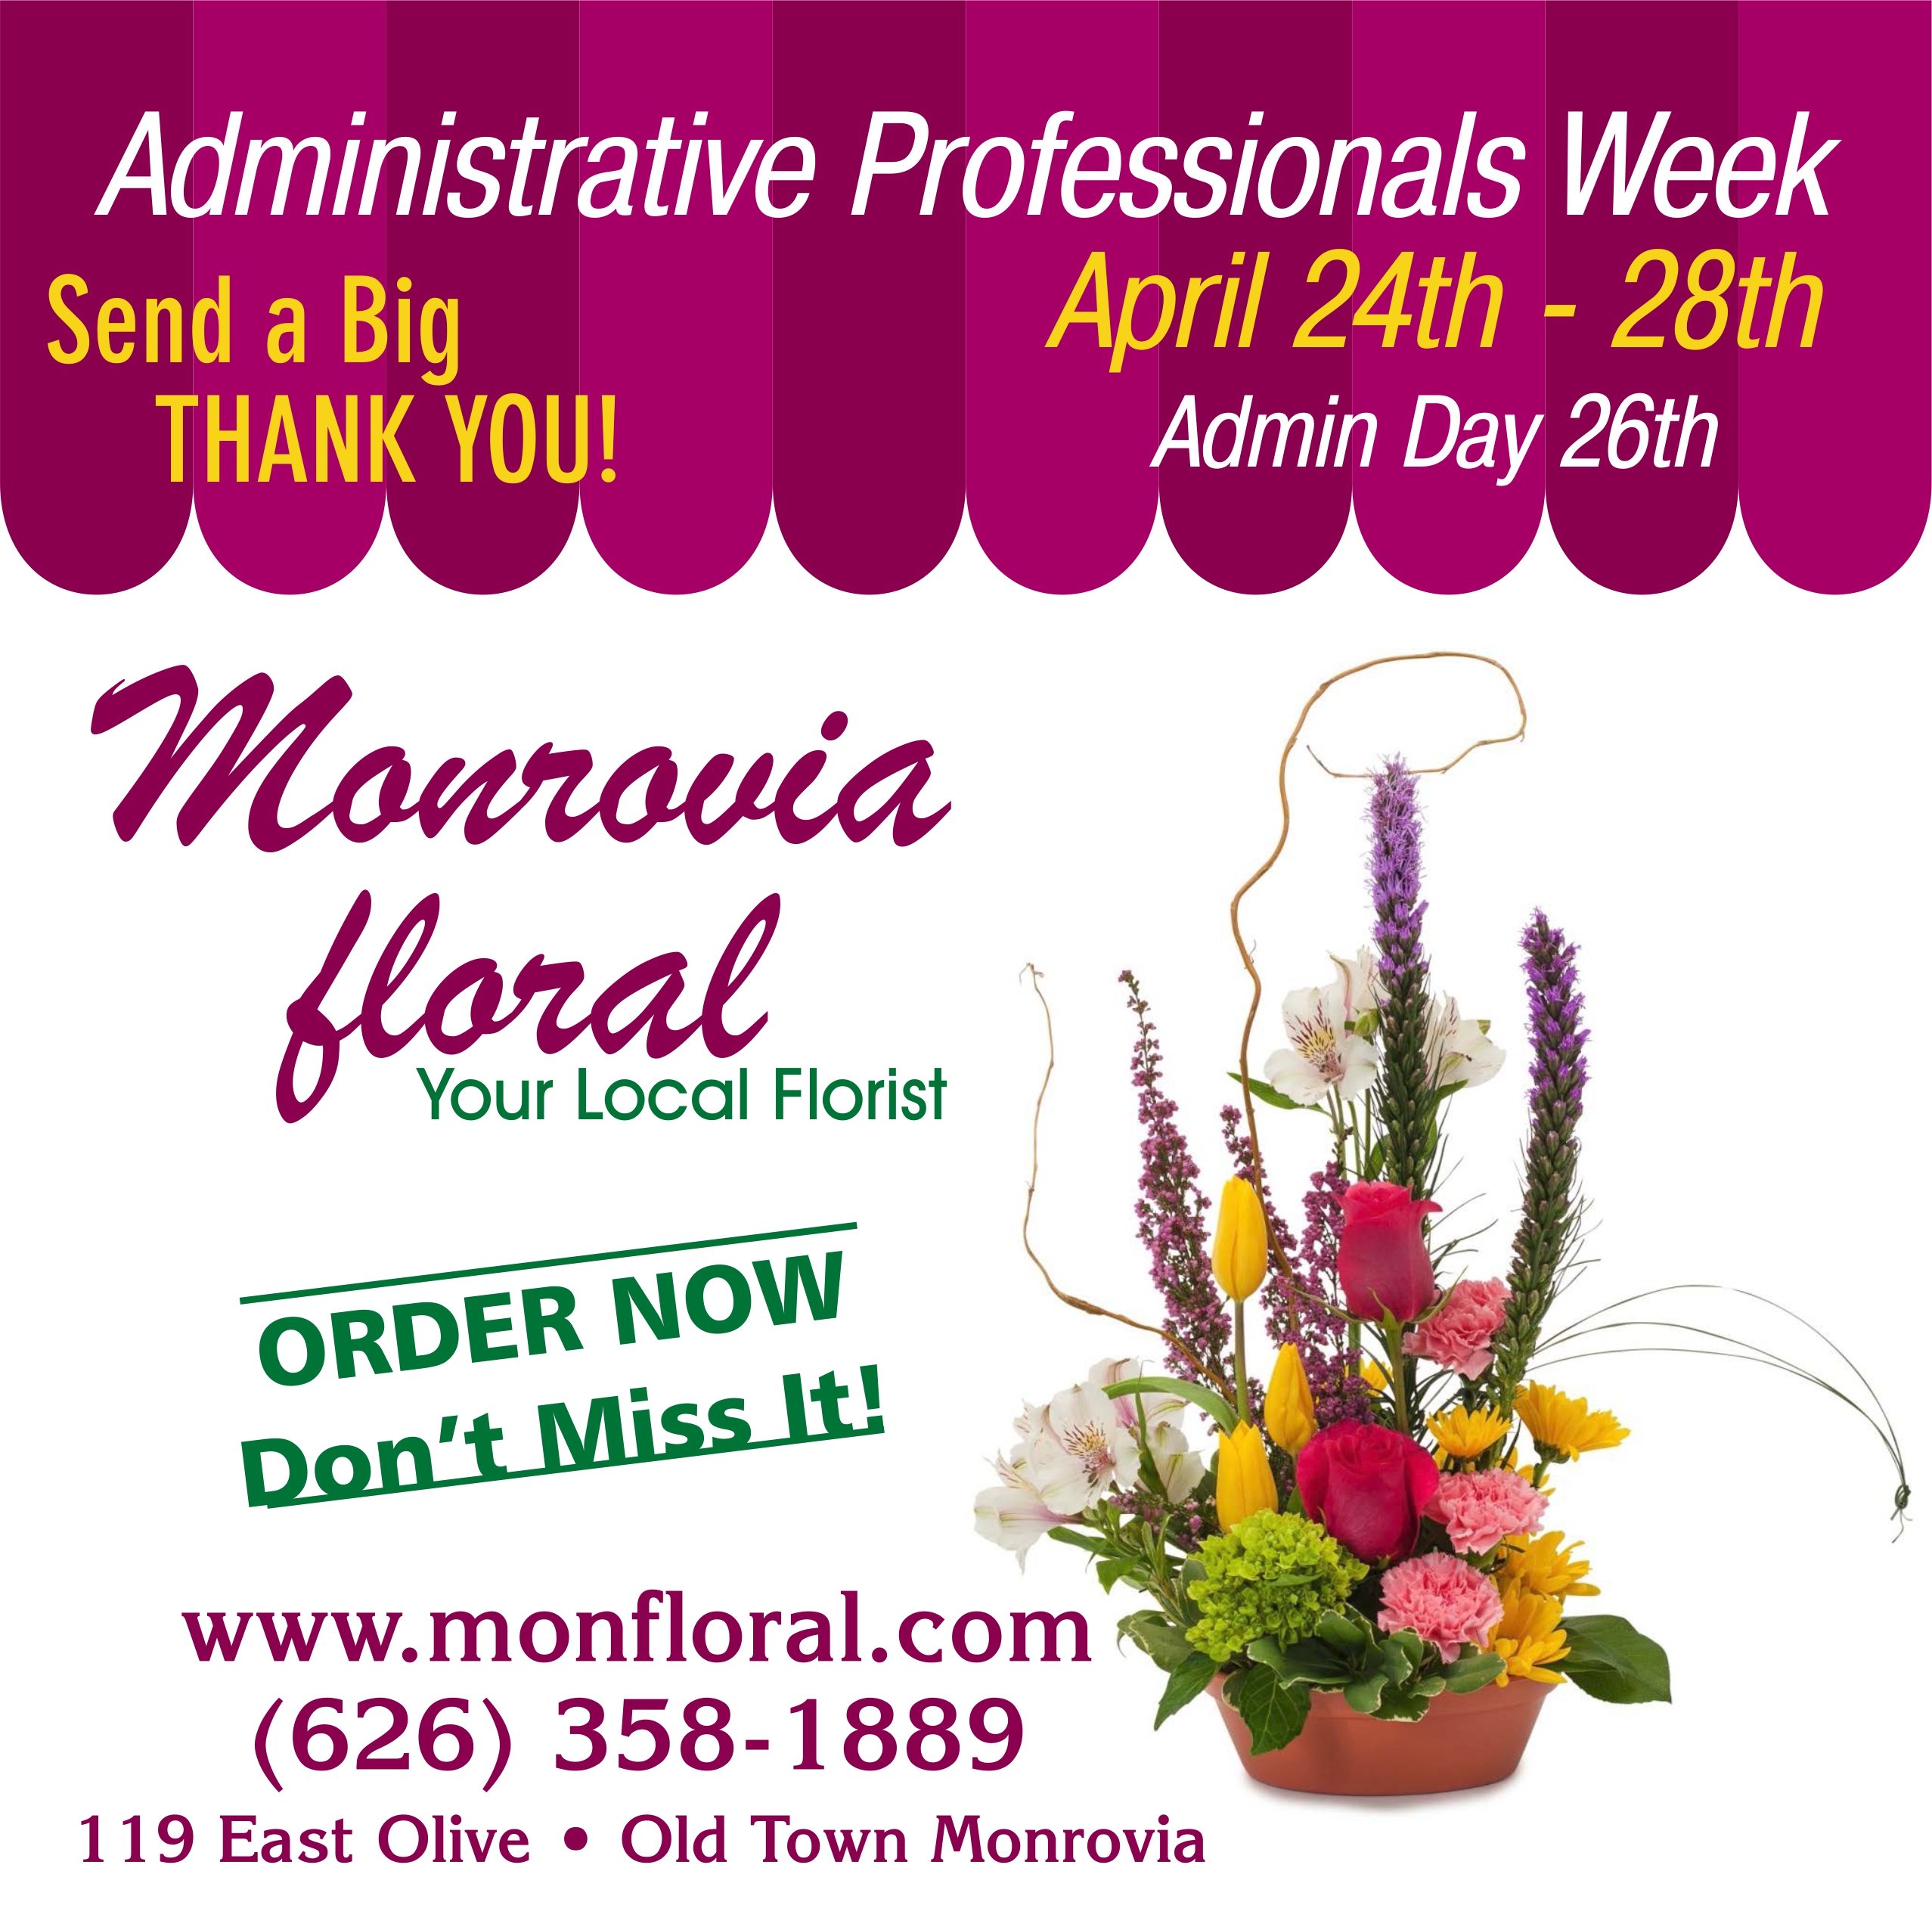 Monrovia Floral admin day advertisement for floral arrangements